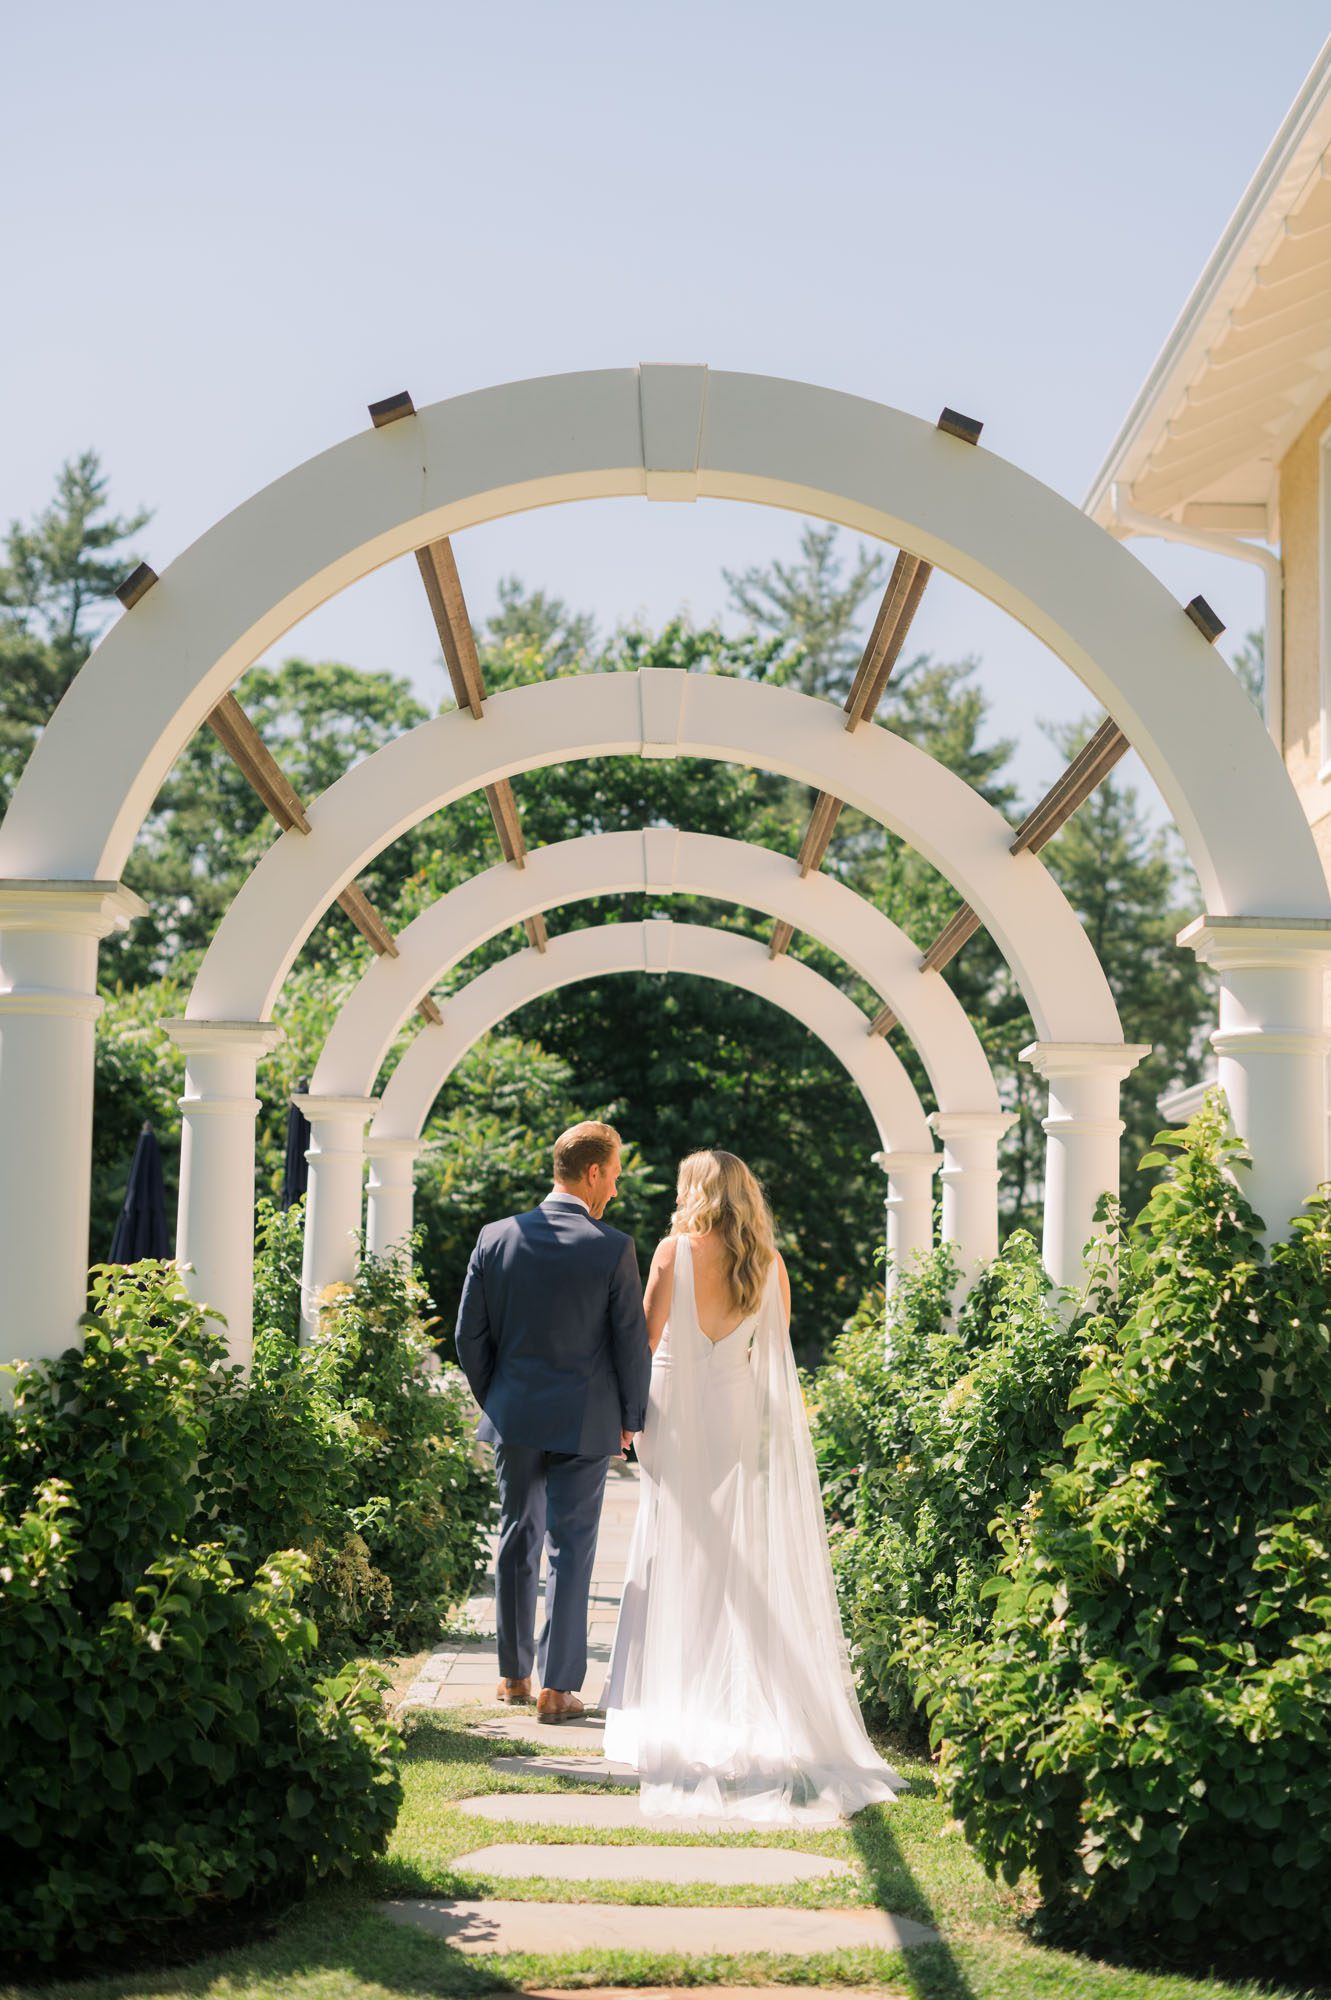 Bride & groom walking through an archway in York Maine Wedding